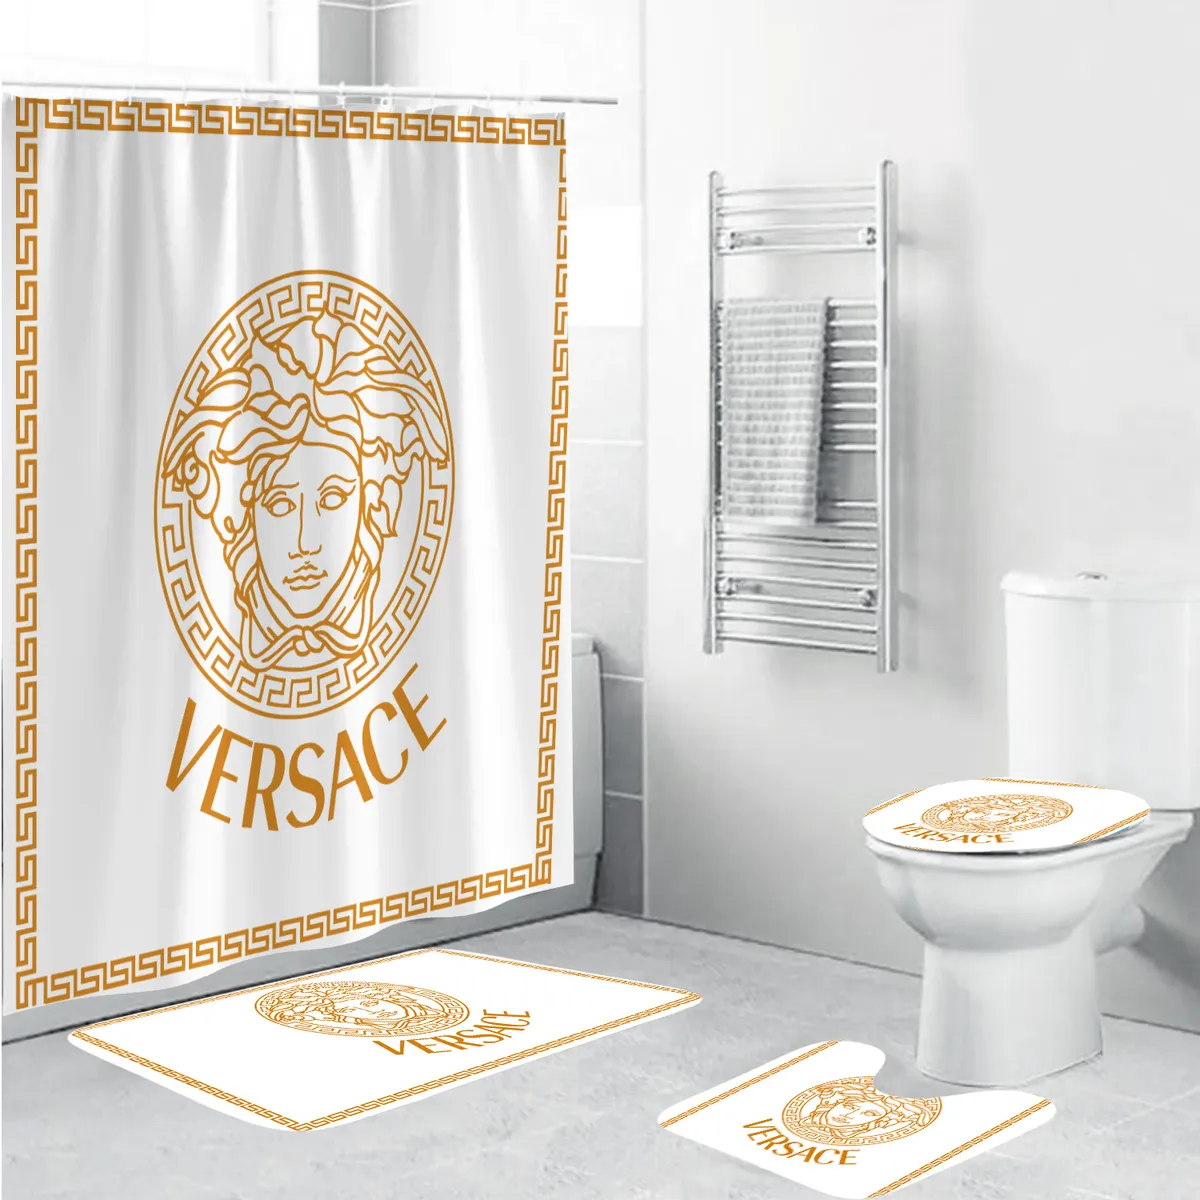 Versace White Golden Bathroom Set Hypebeast Luxury Fashion Brand Bath Mat Home Decor